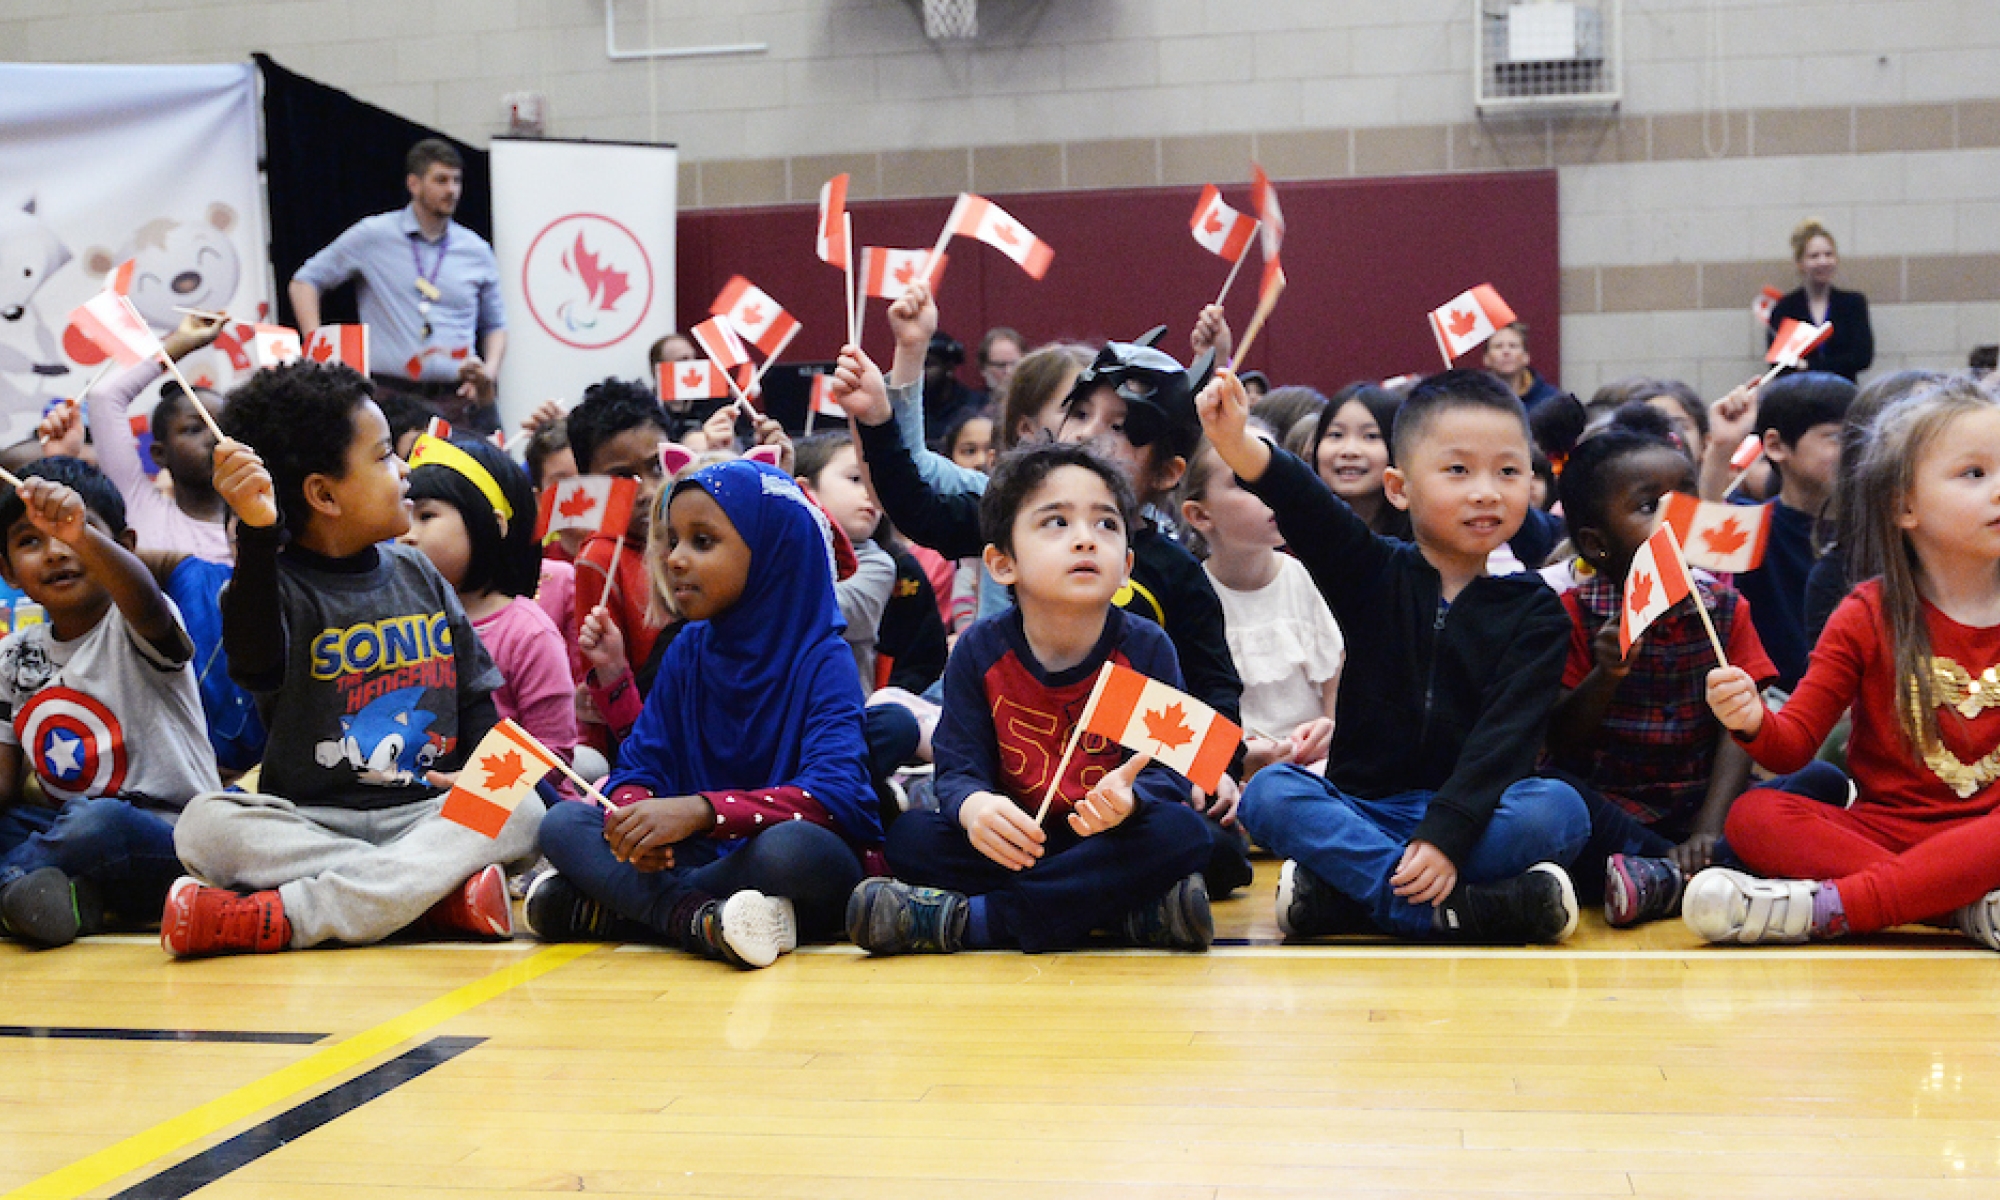 Kids waving Canadian flags